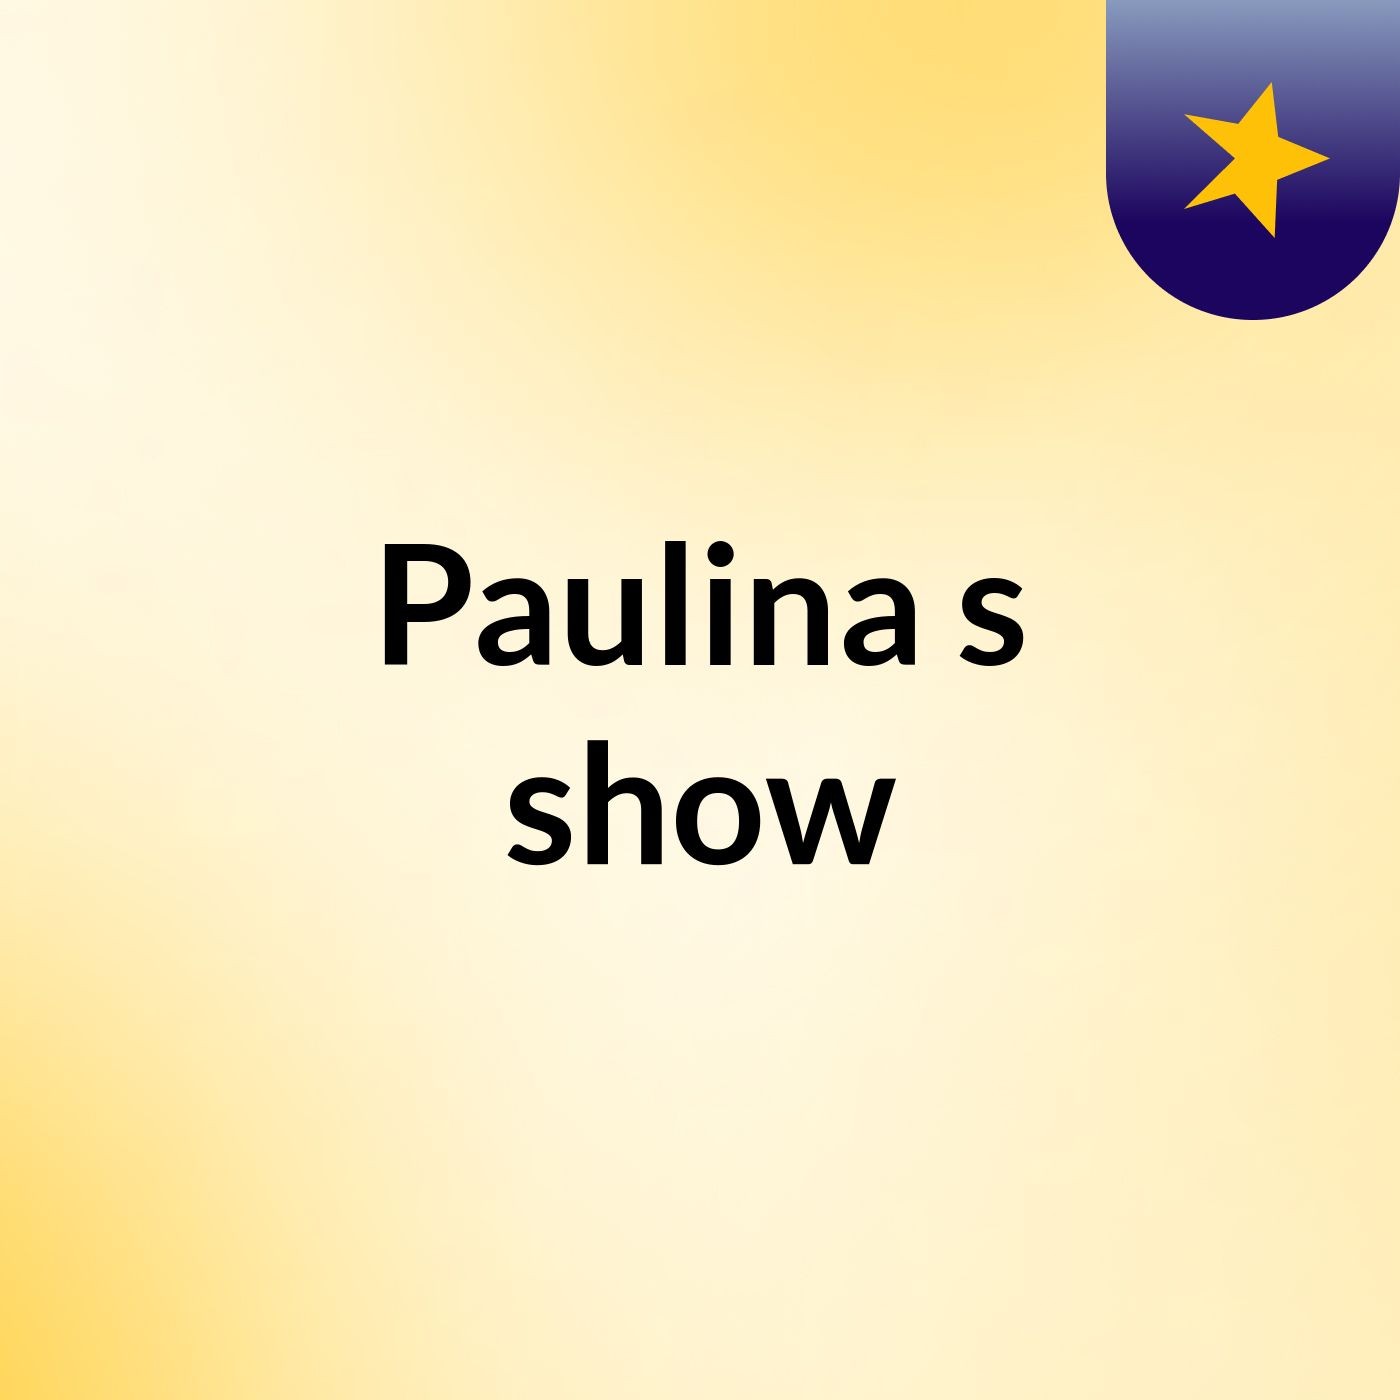 Paulina's show